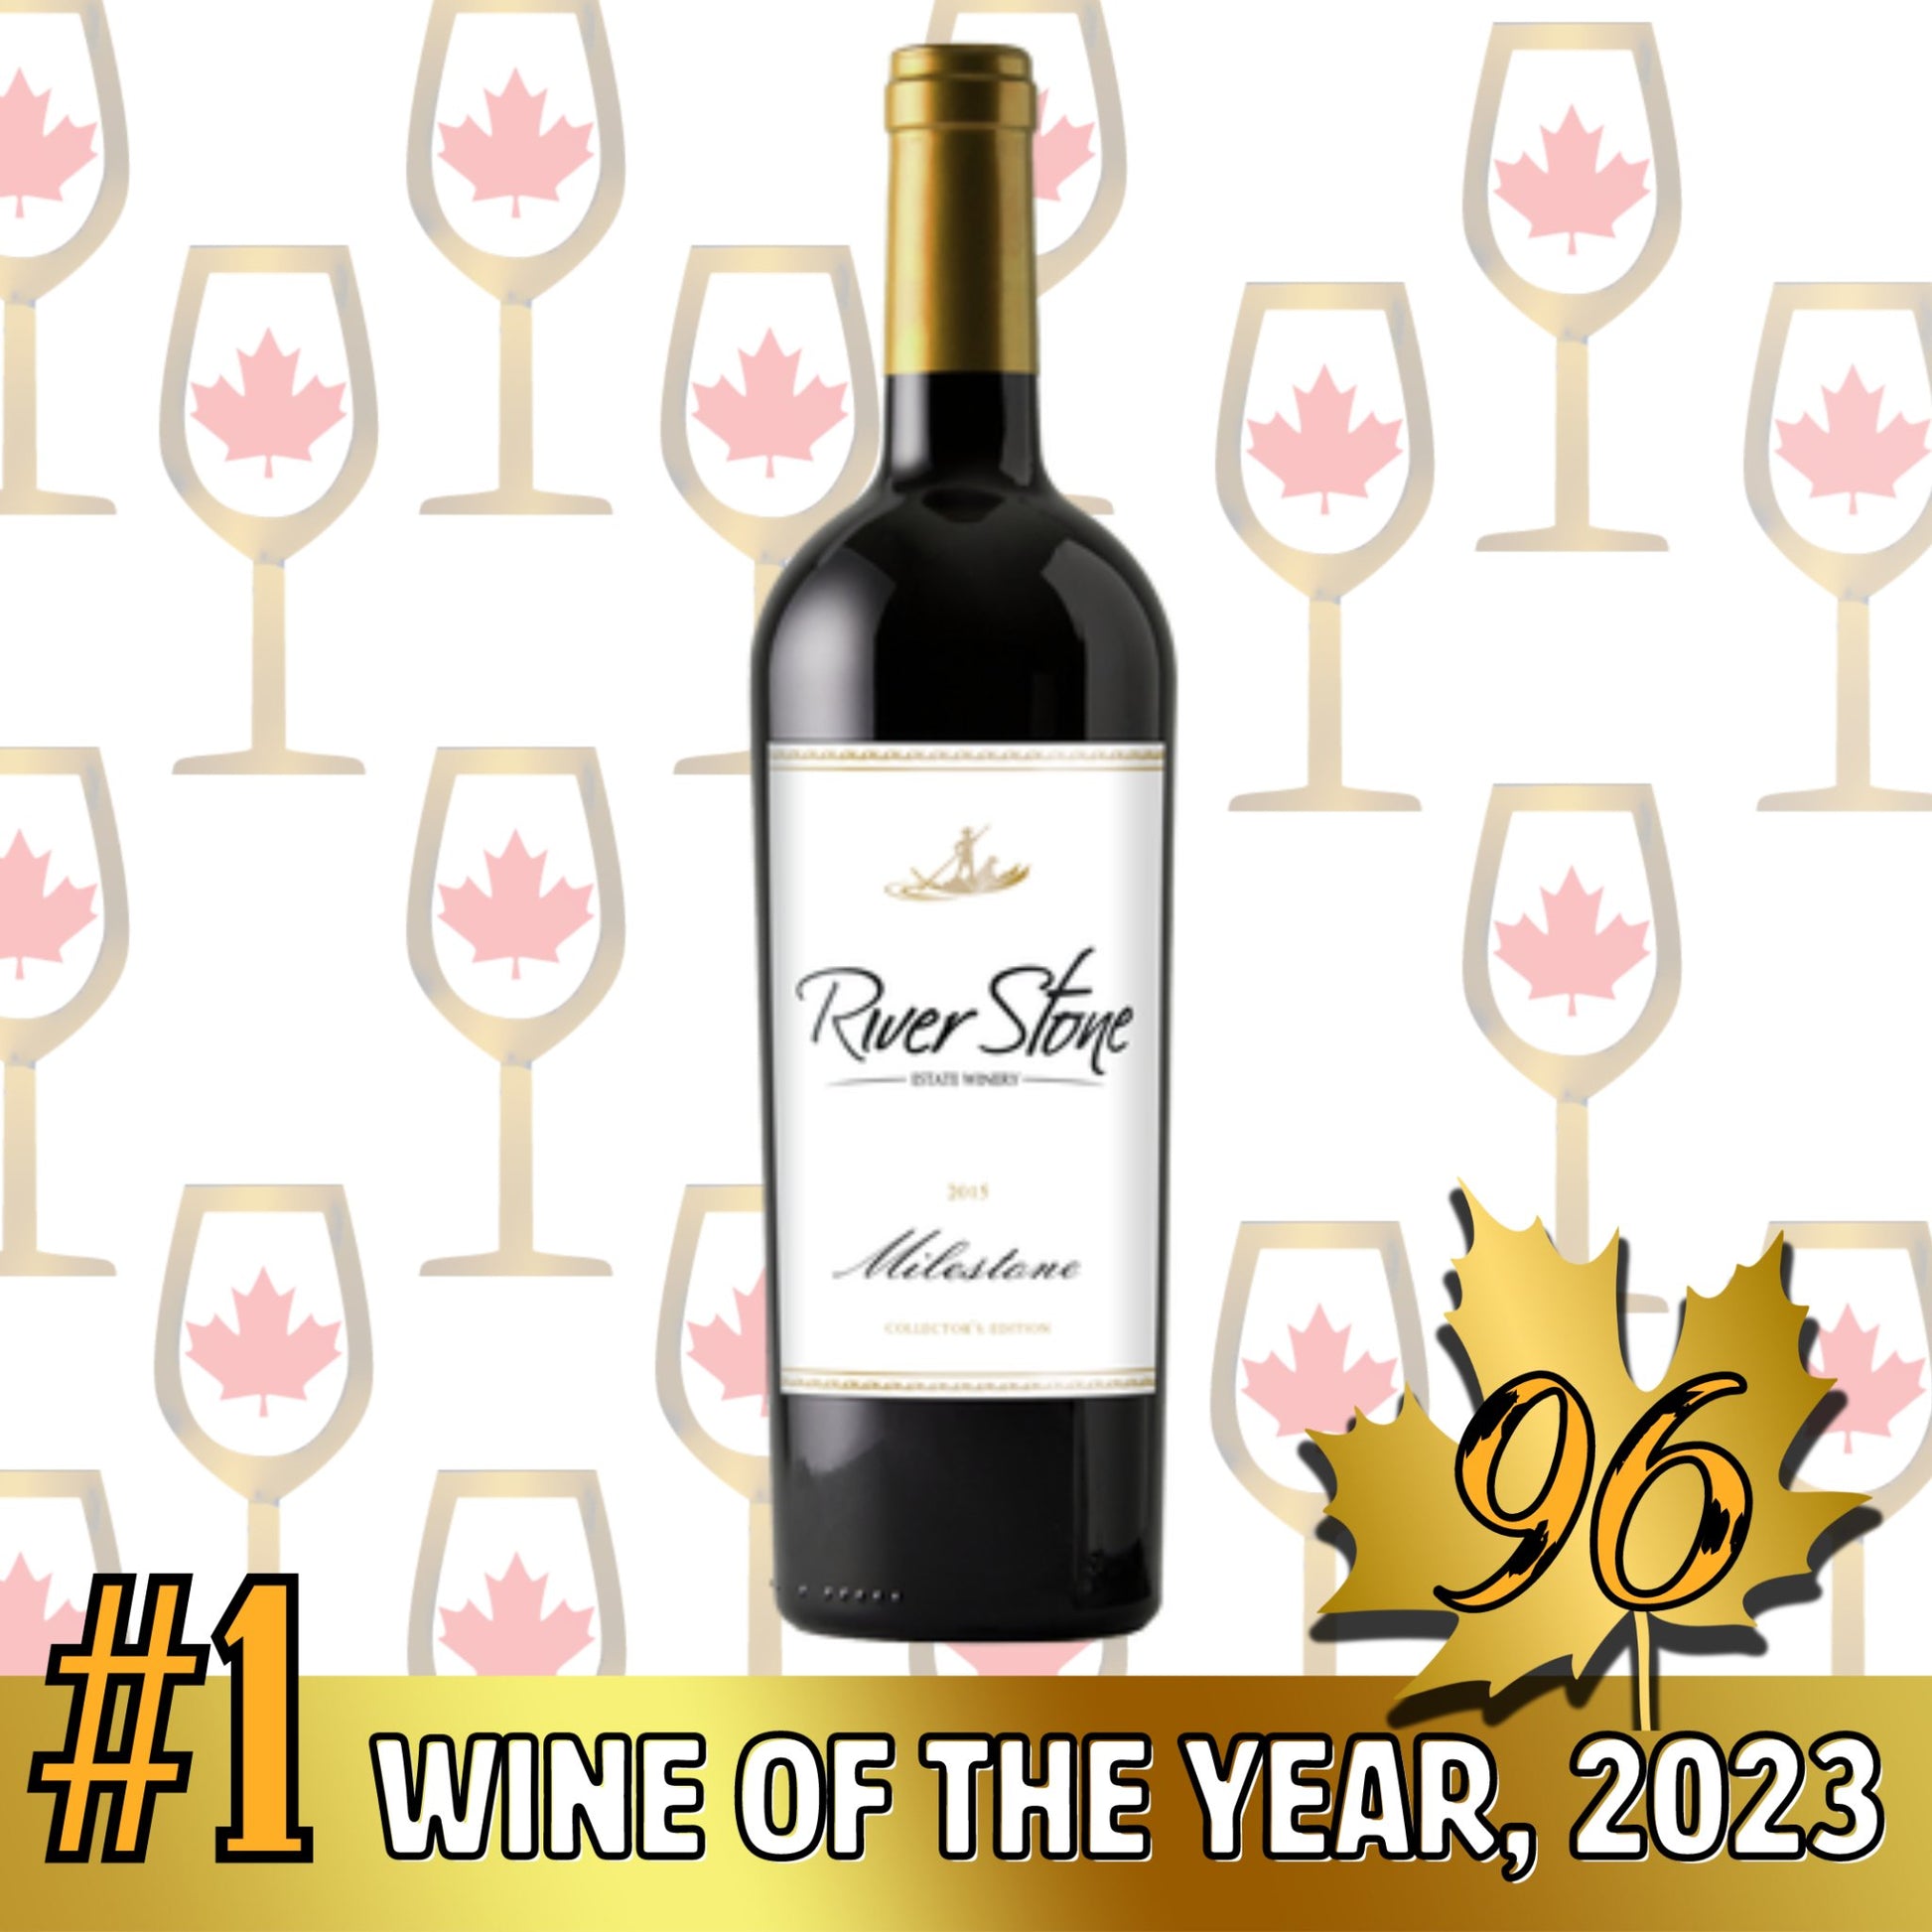 #1 Wine of the Year: 2015 River Stone “Milestone” Collector’s Edition - Carl's Wine Club